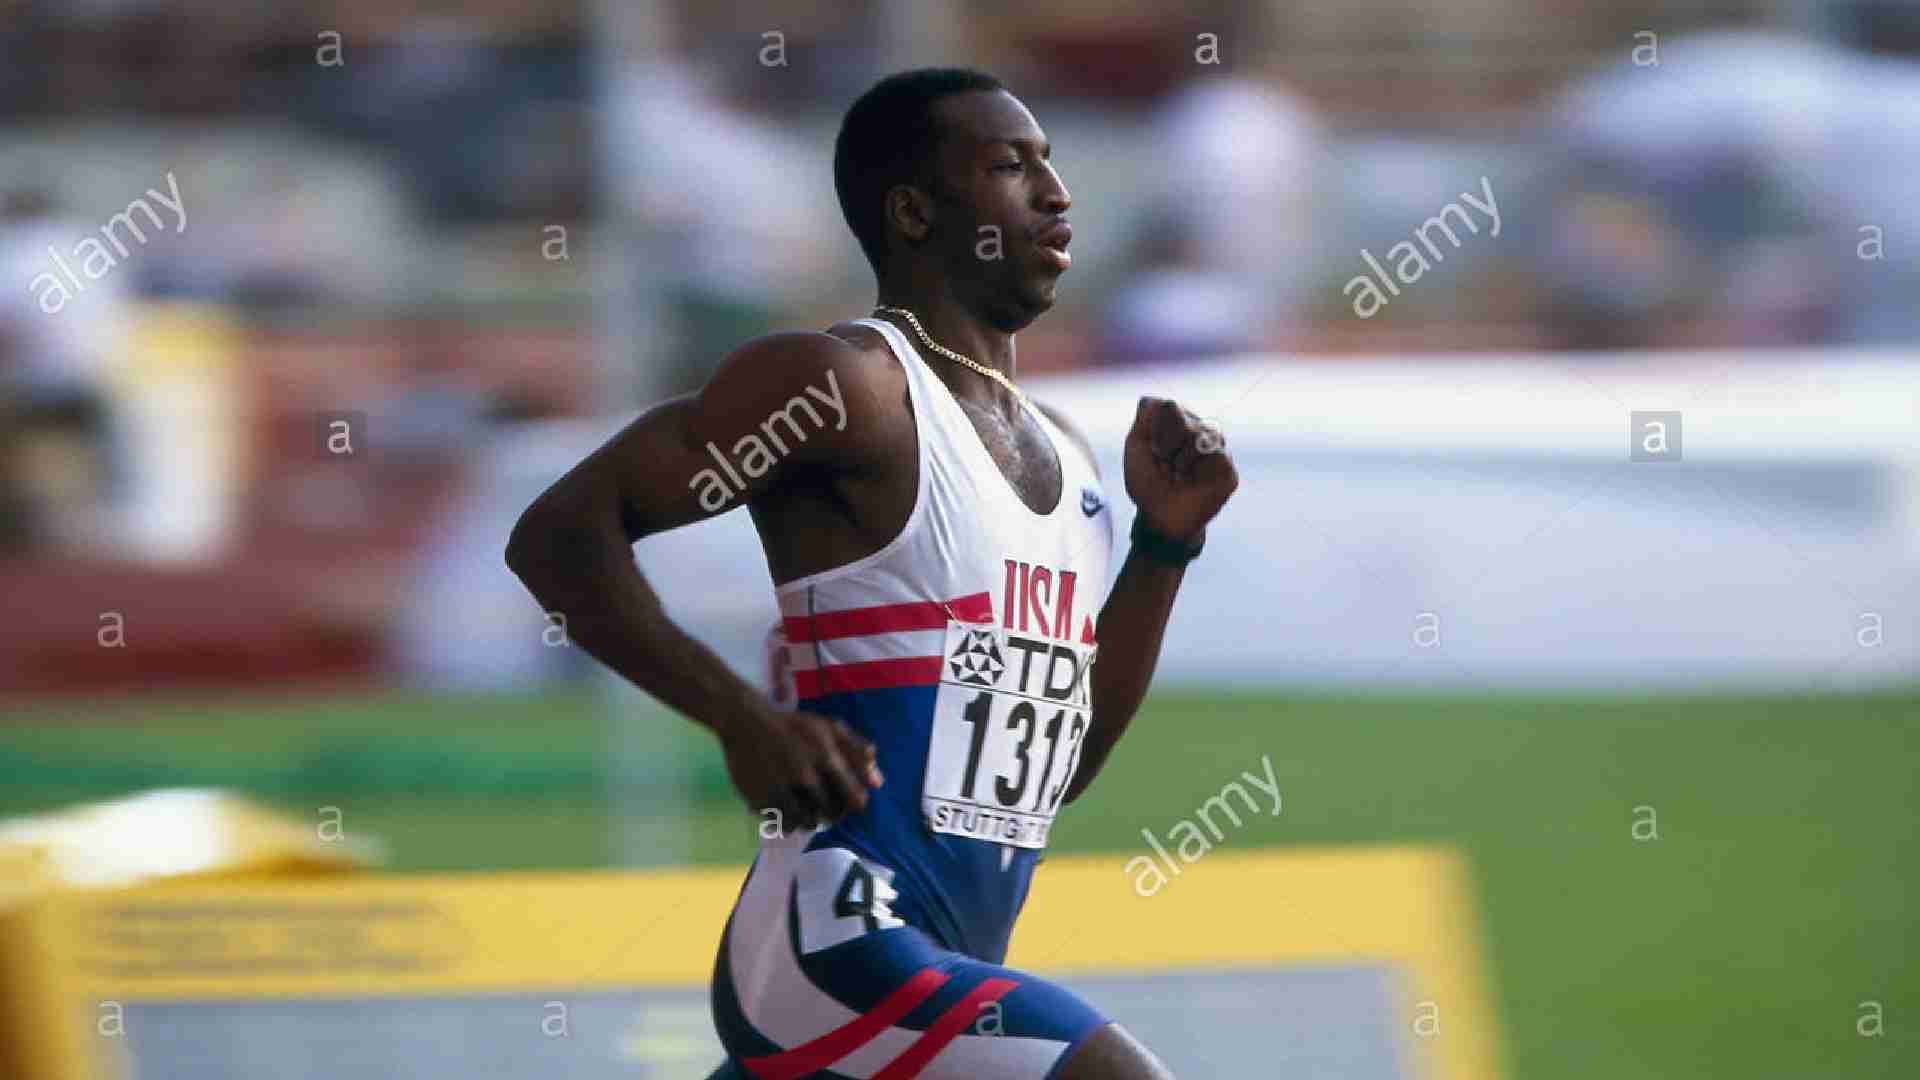 Michael Johnson in the men's 400m